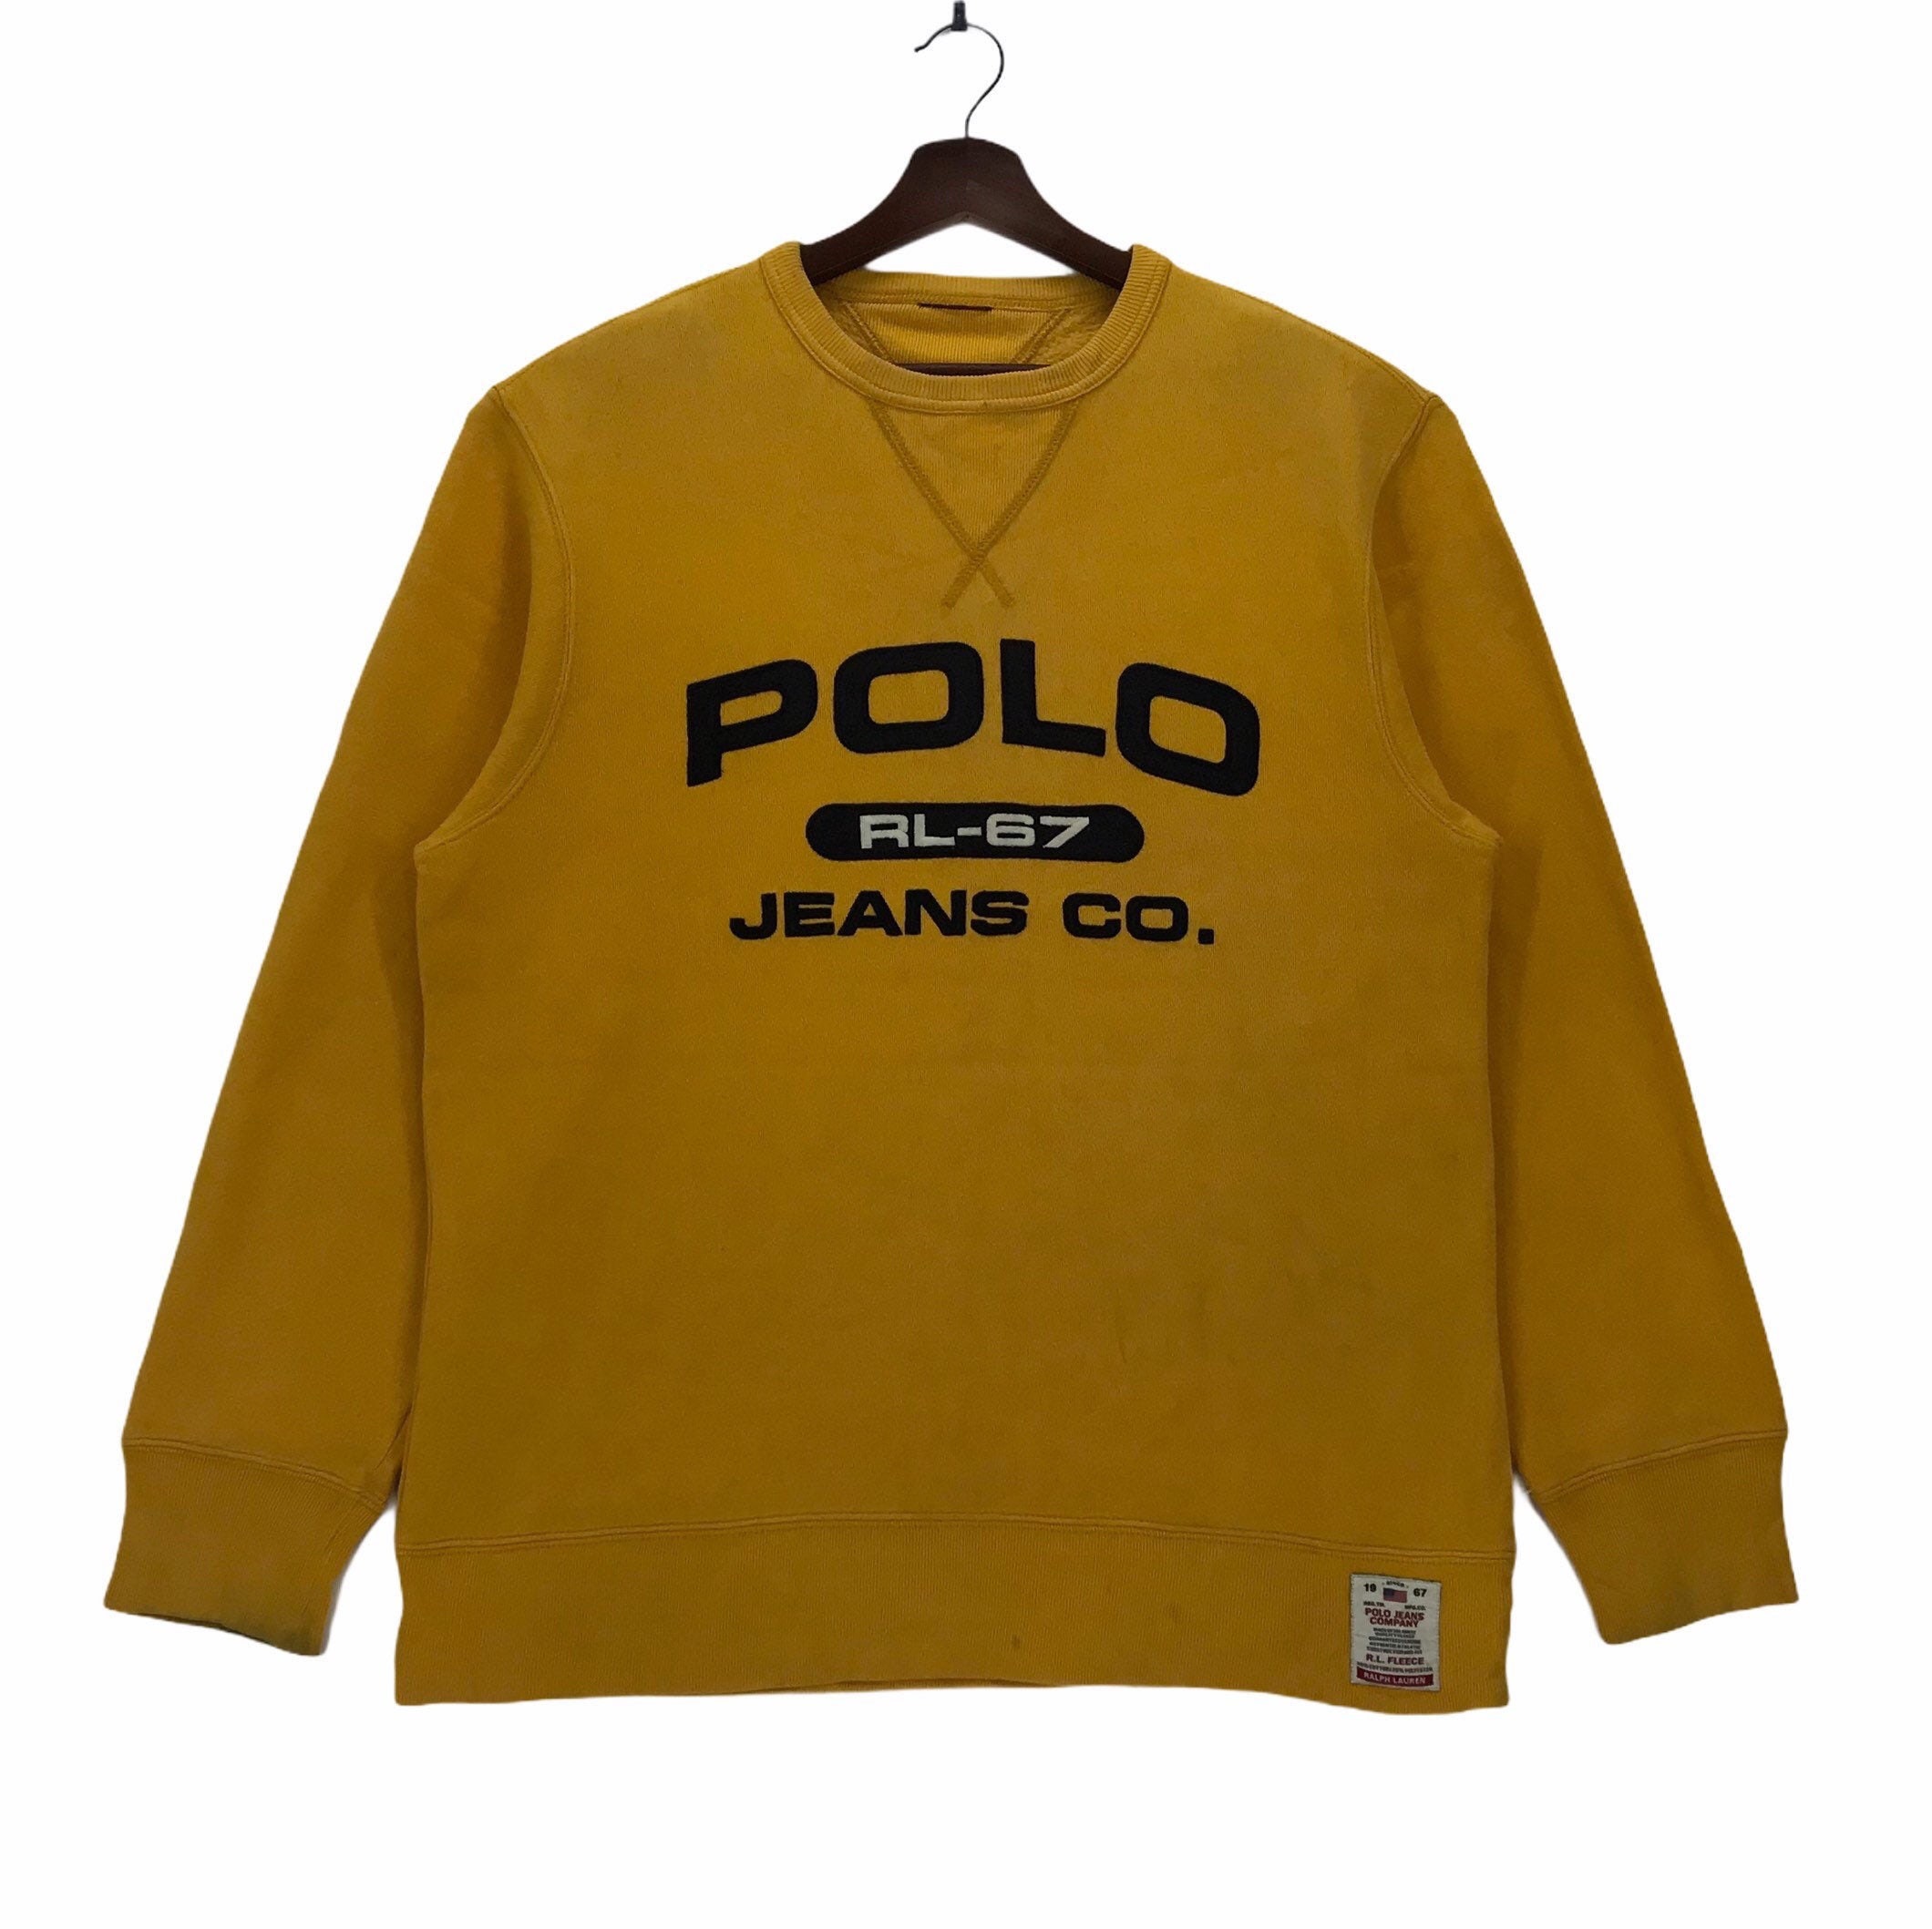 Vintage Polo RL-67 Jeans Co. Ralph Lauren Sweatshirt Spellout - Etsy